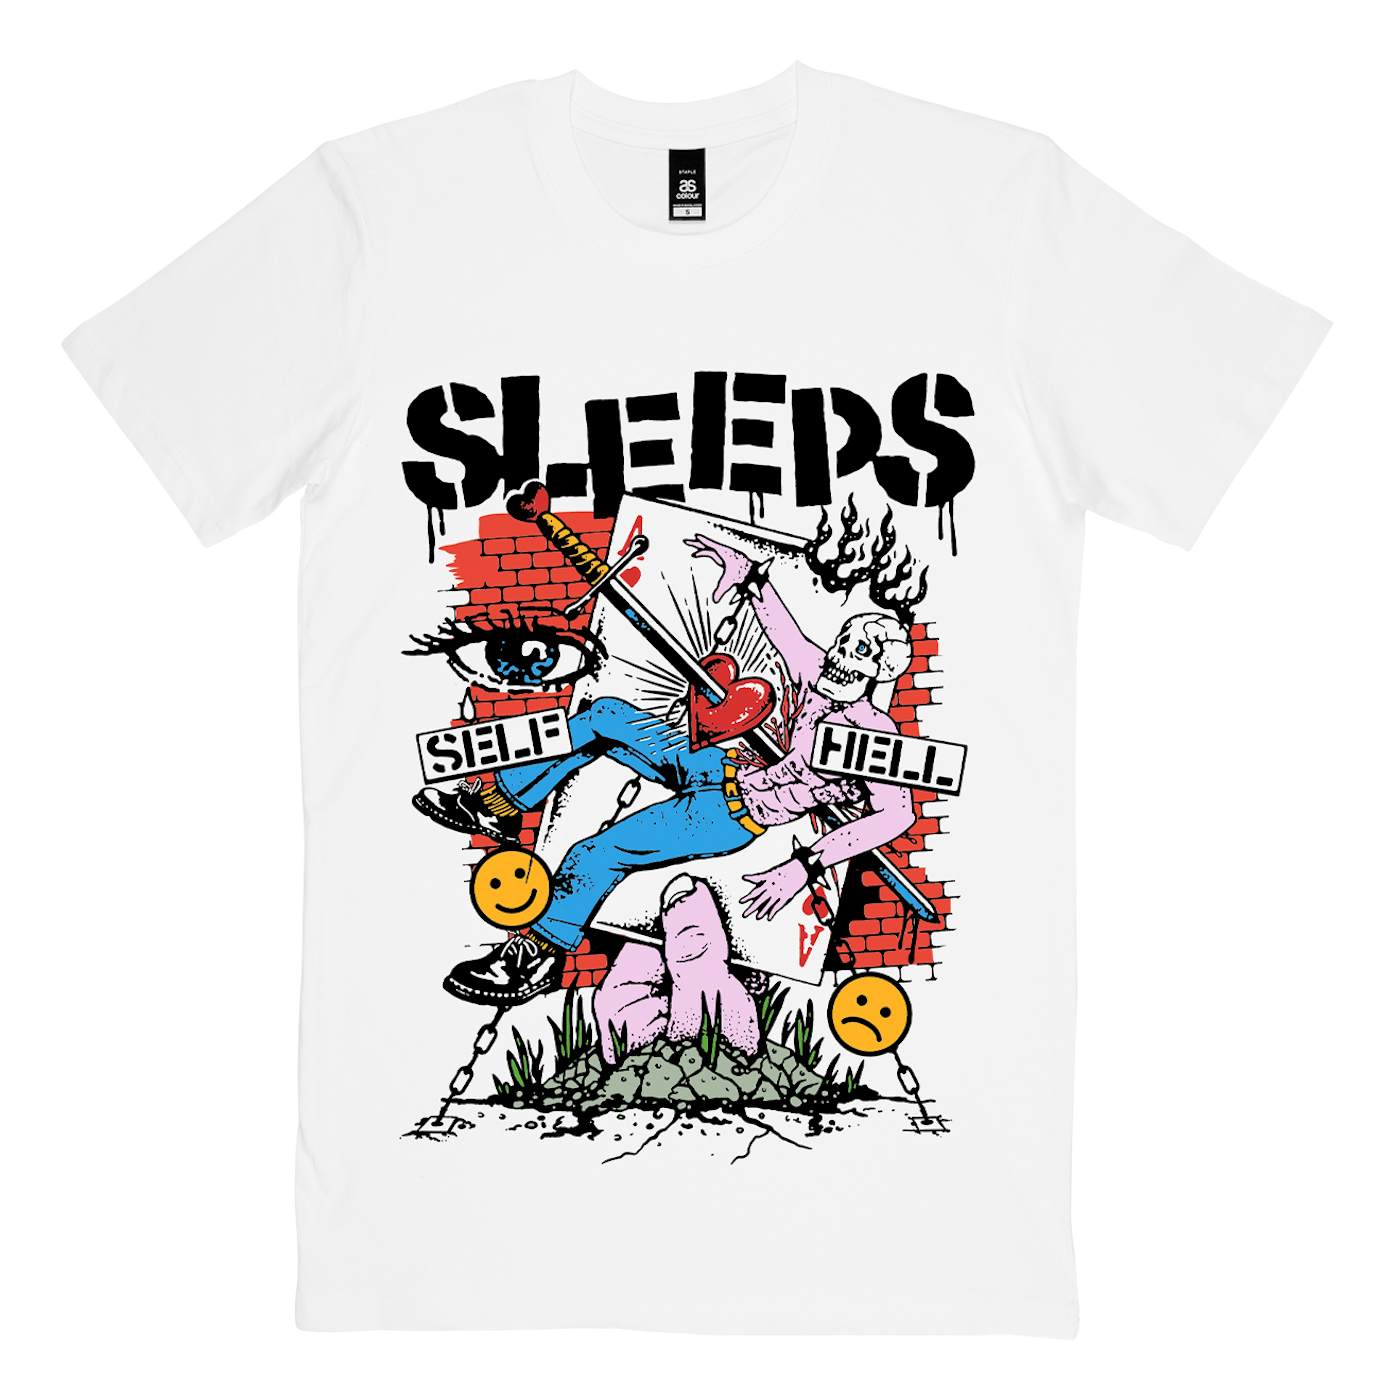 While She Sleeps "Self Hell" T-Shirt